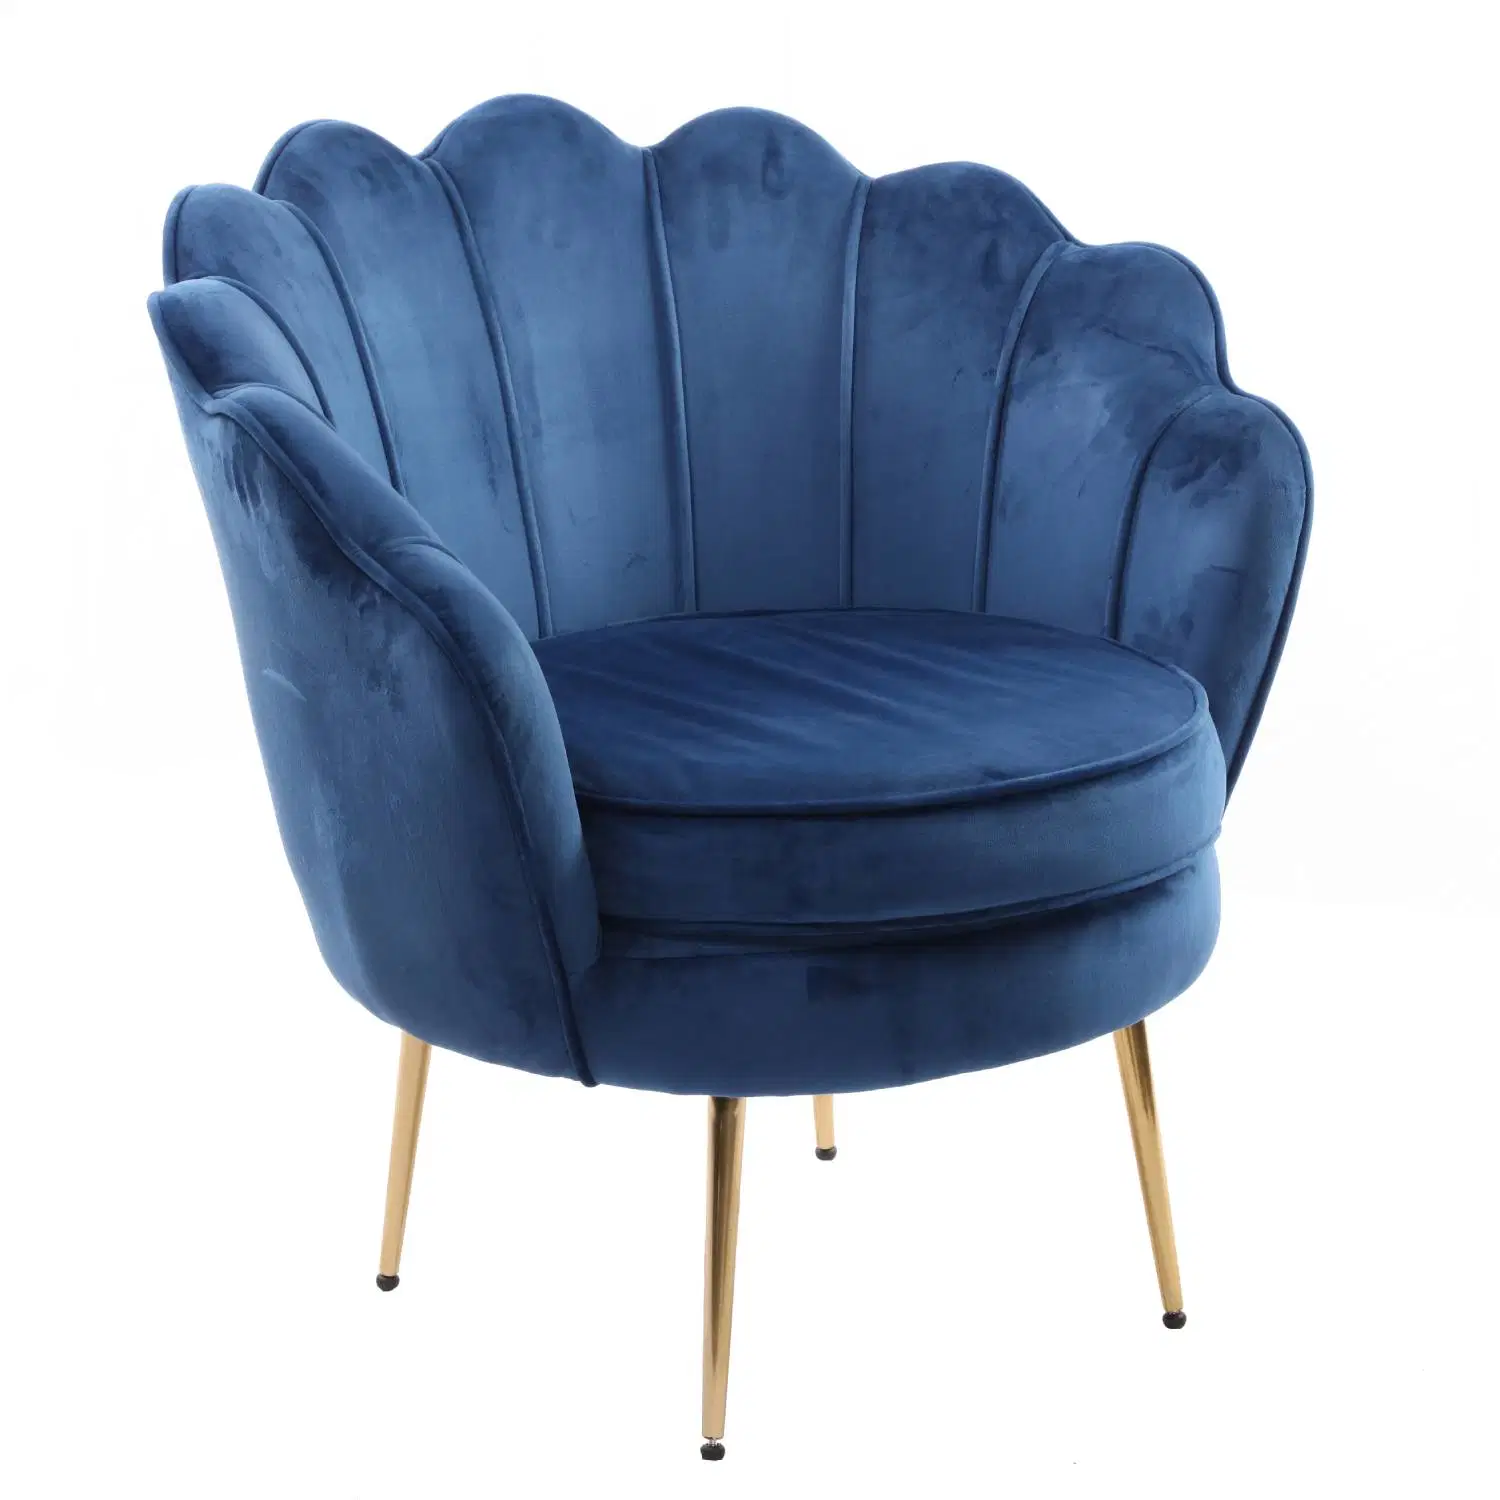 Sidanli Fabric Living Room Chair with Metal Legs.